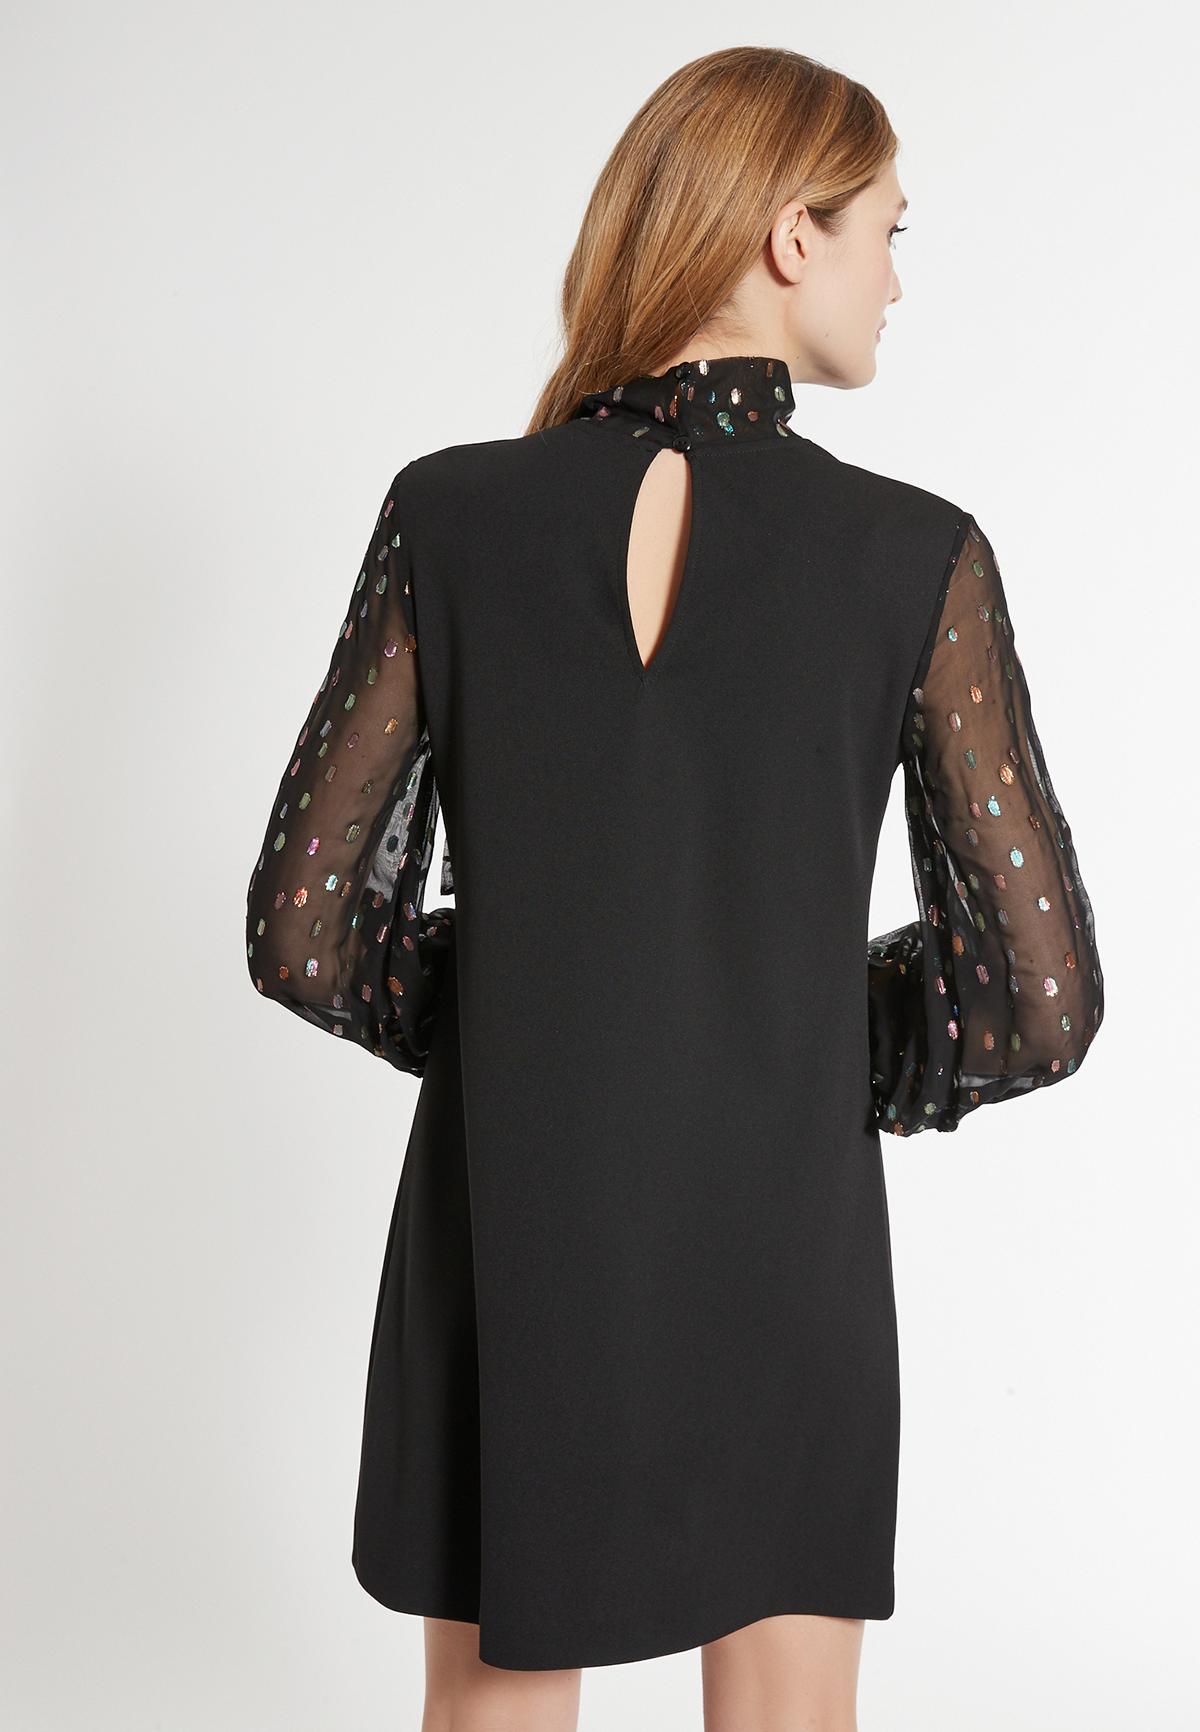 Black Tunic Dress Ecosi with Chiffon Sleeves, Tie and Glitter Dots ...